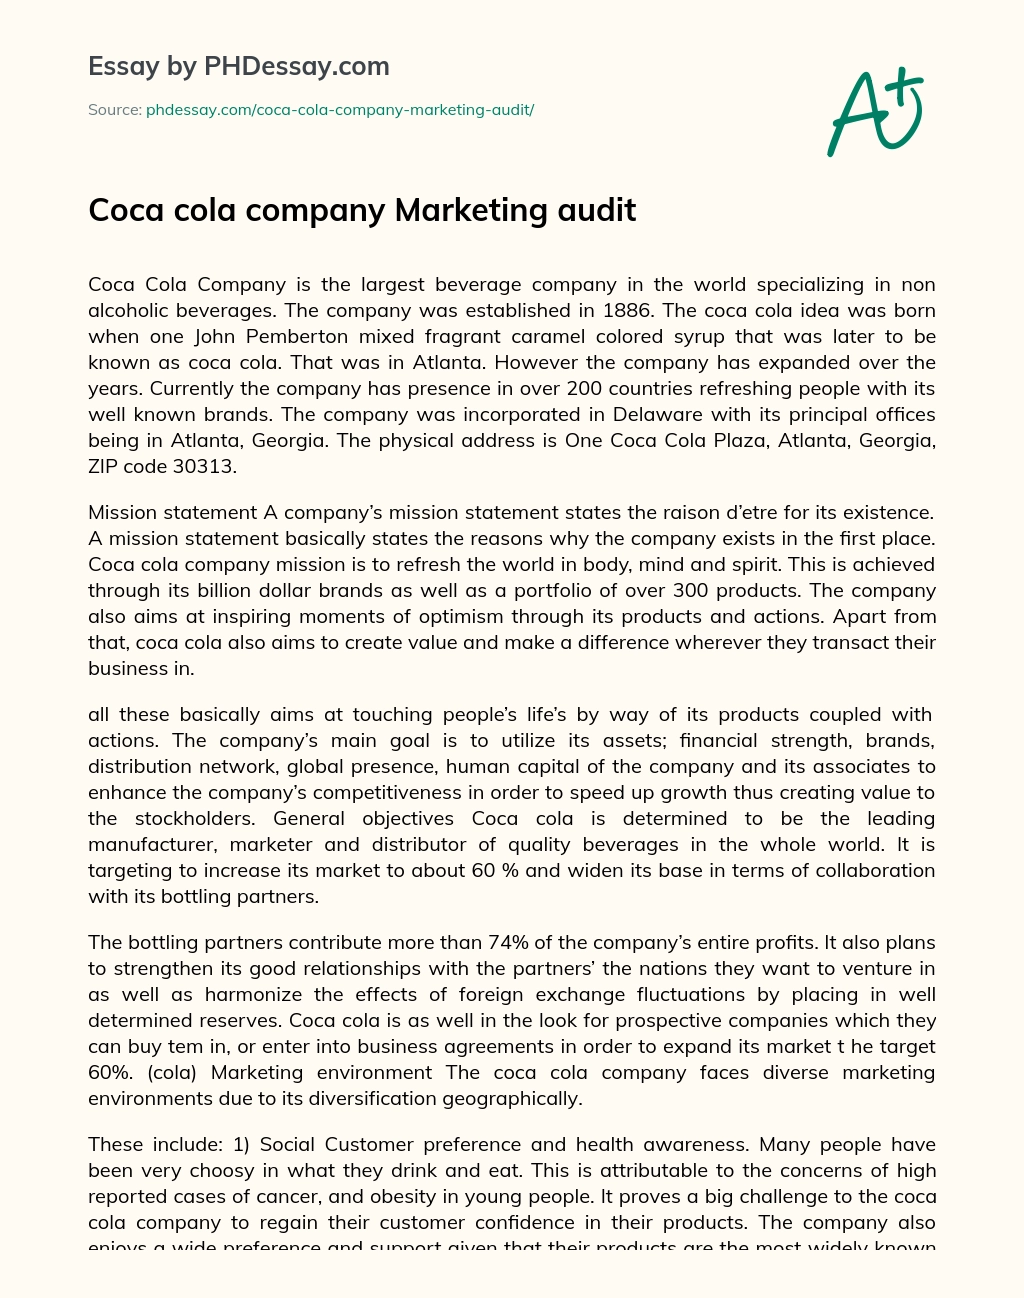 Coca-Cola Company Marketing Audit essay